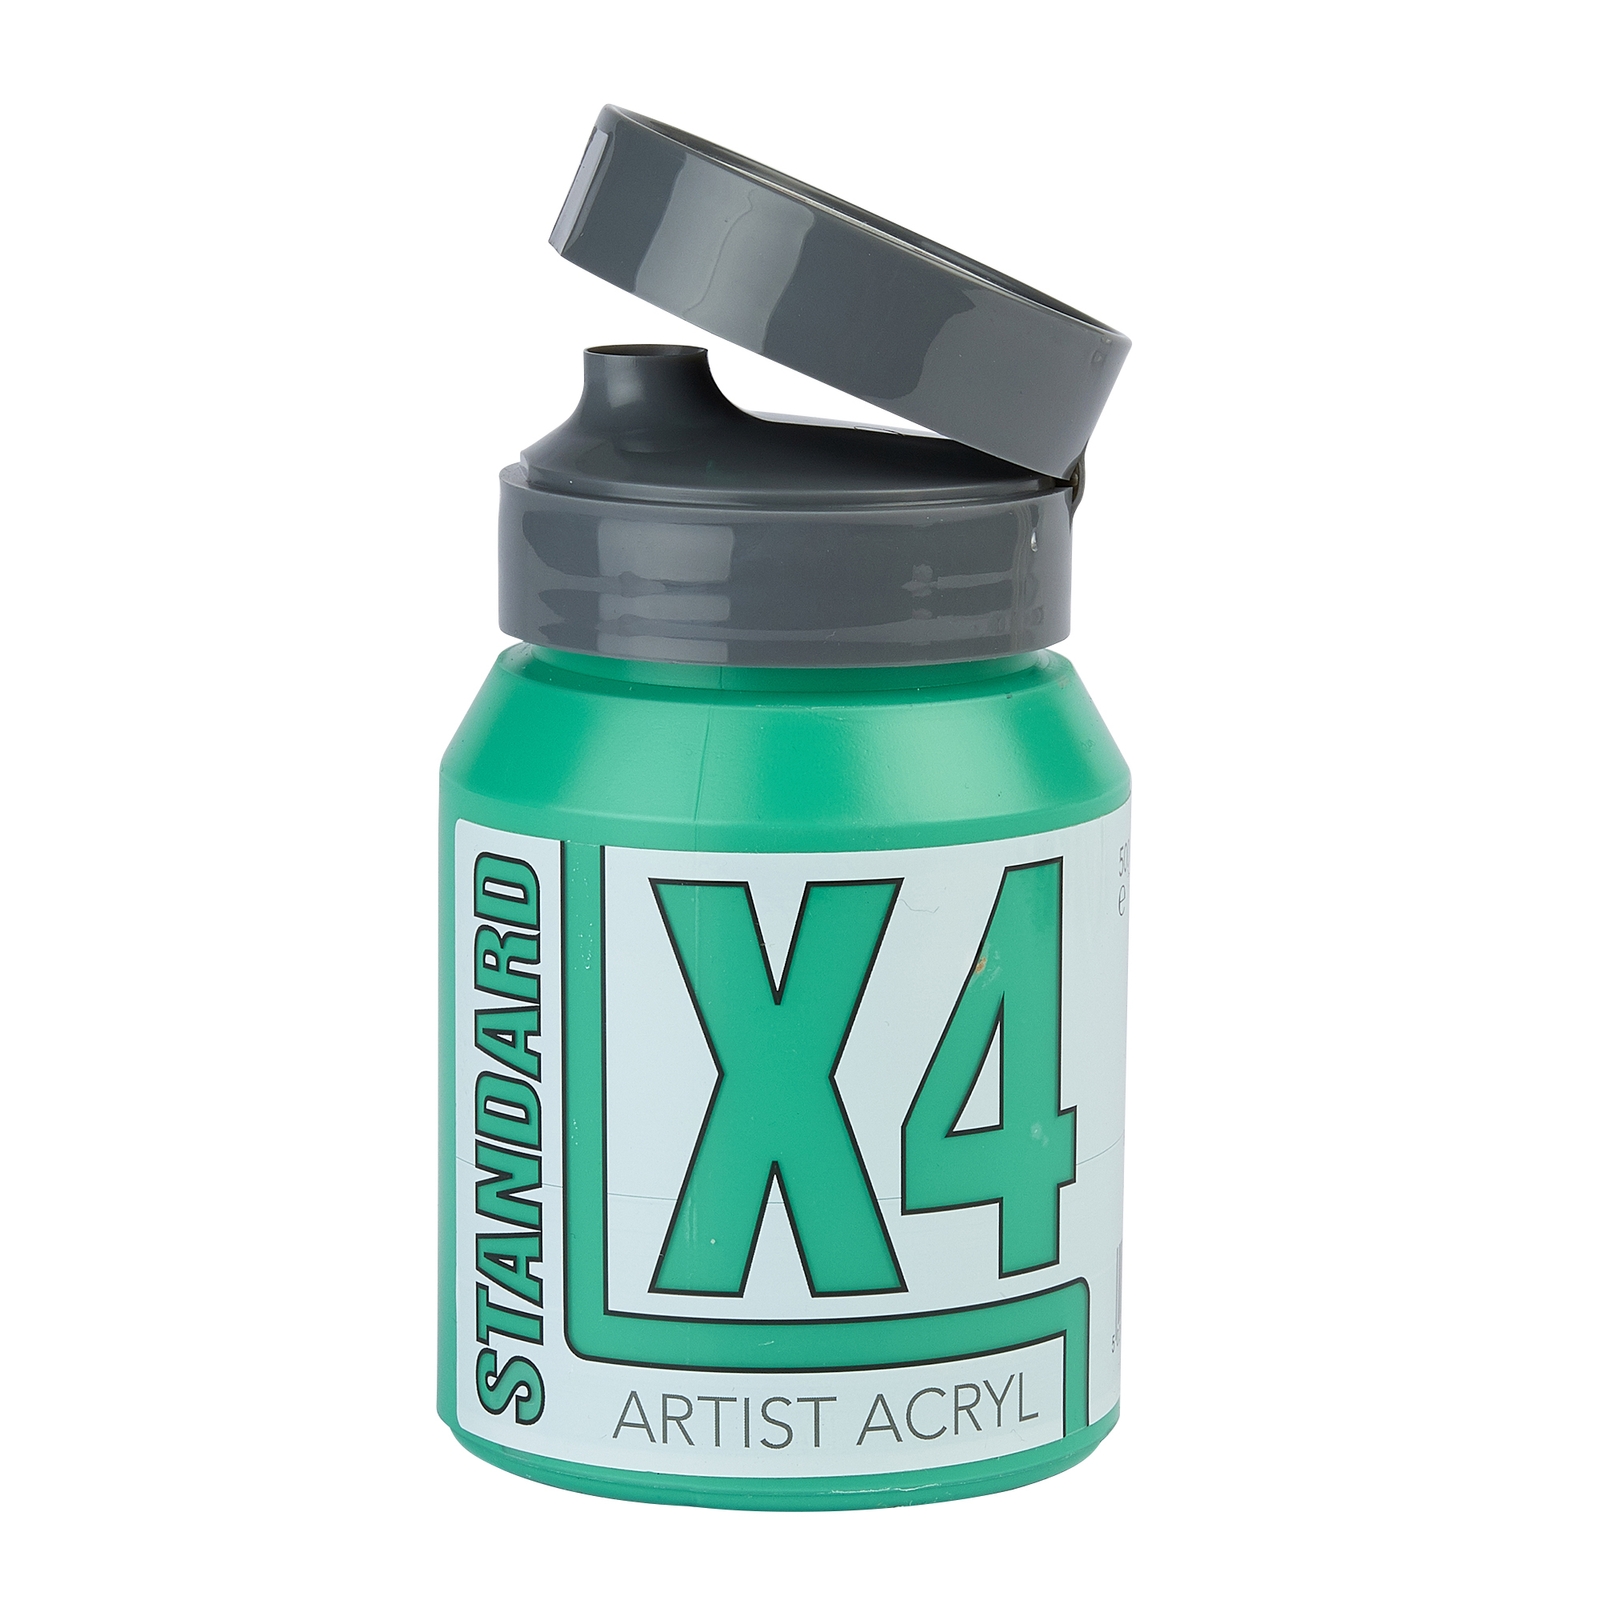 Specialist Crafts X4 Standard Emerald Green Acryl/Acrylic Paint - 500ml - Each